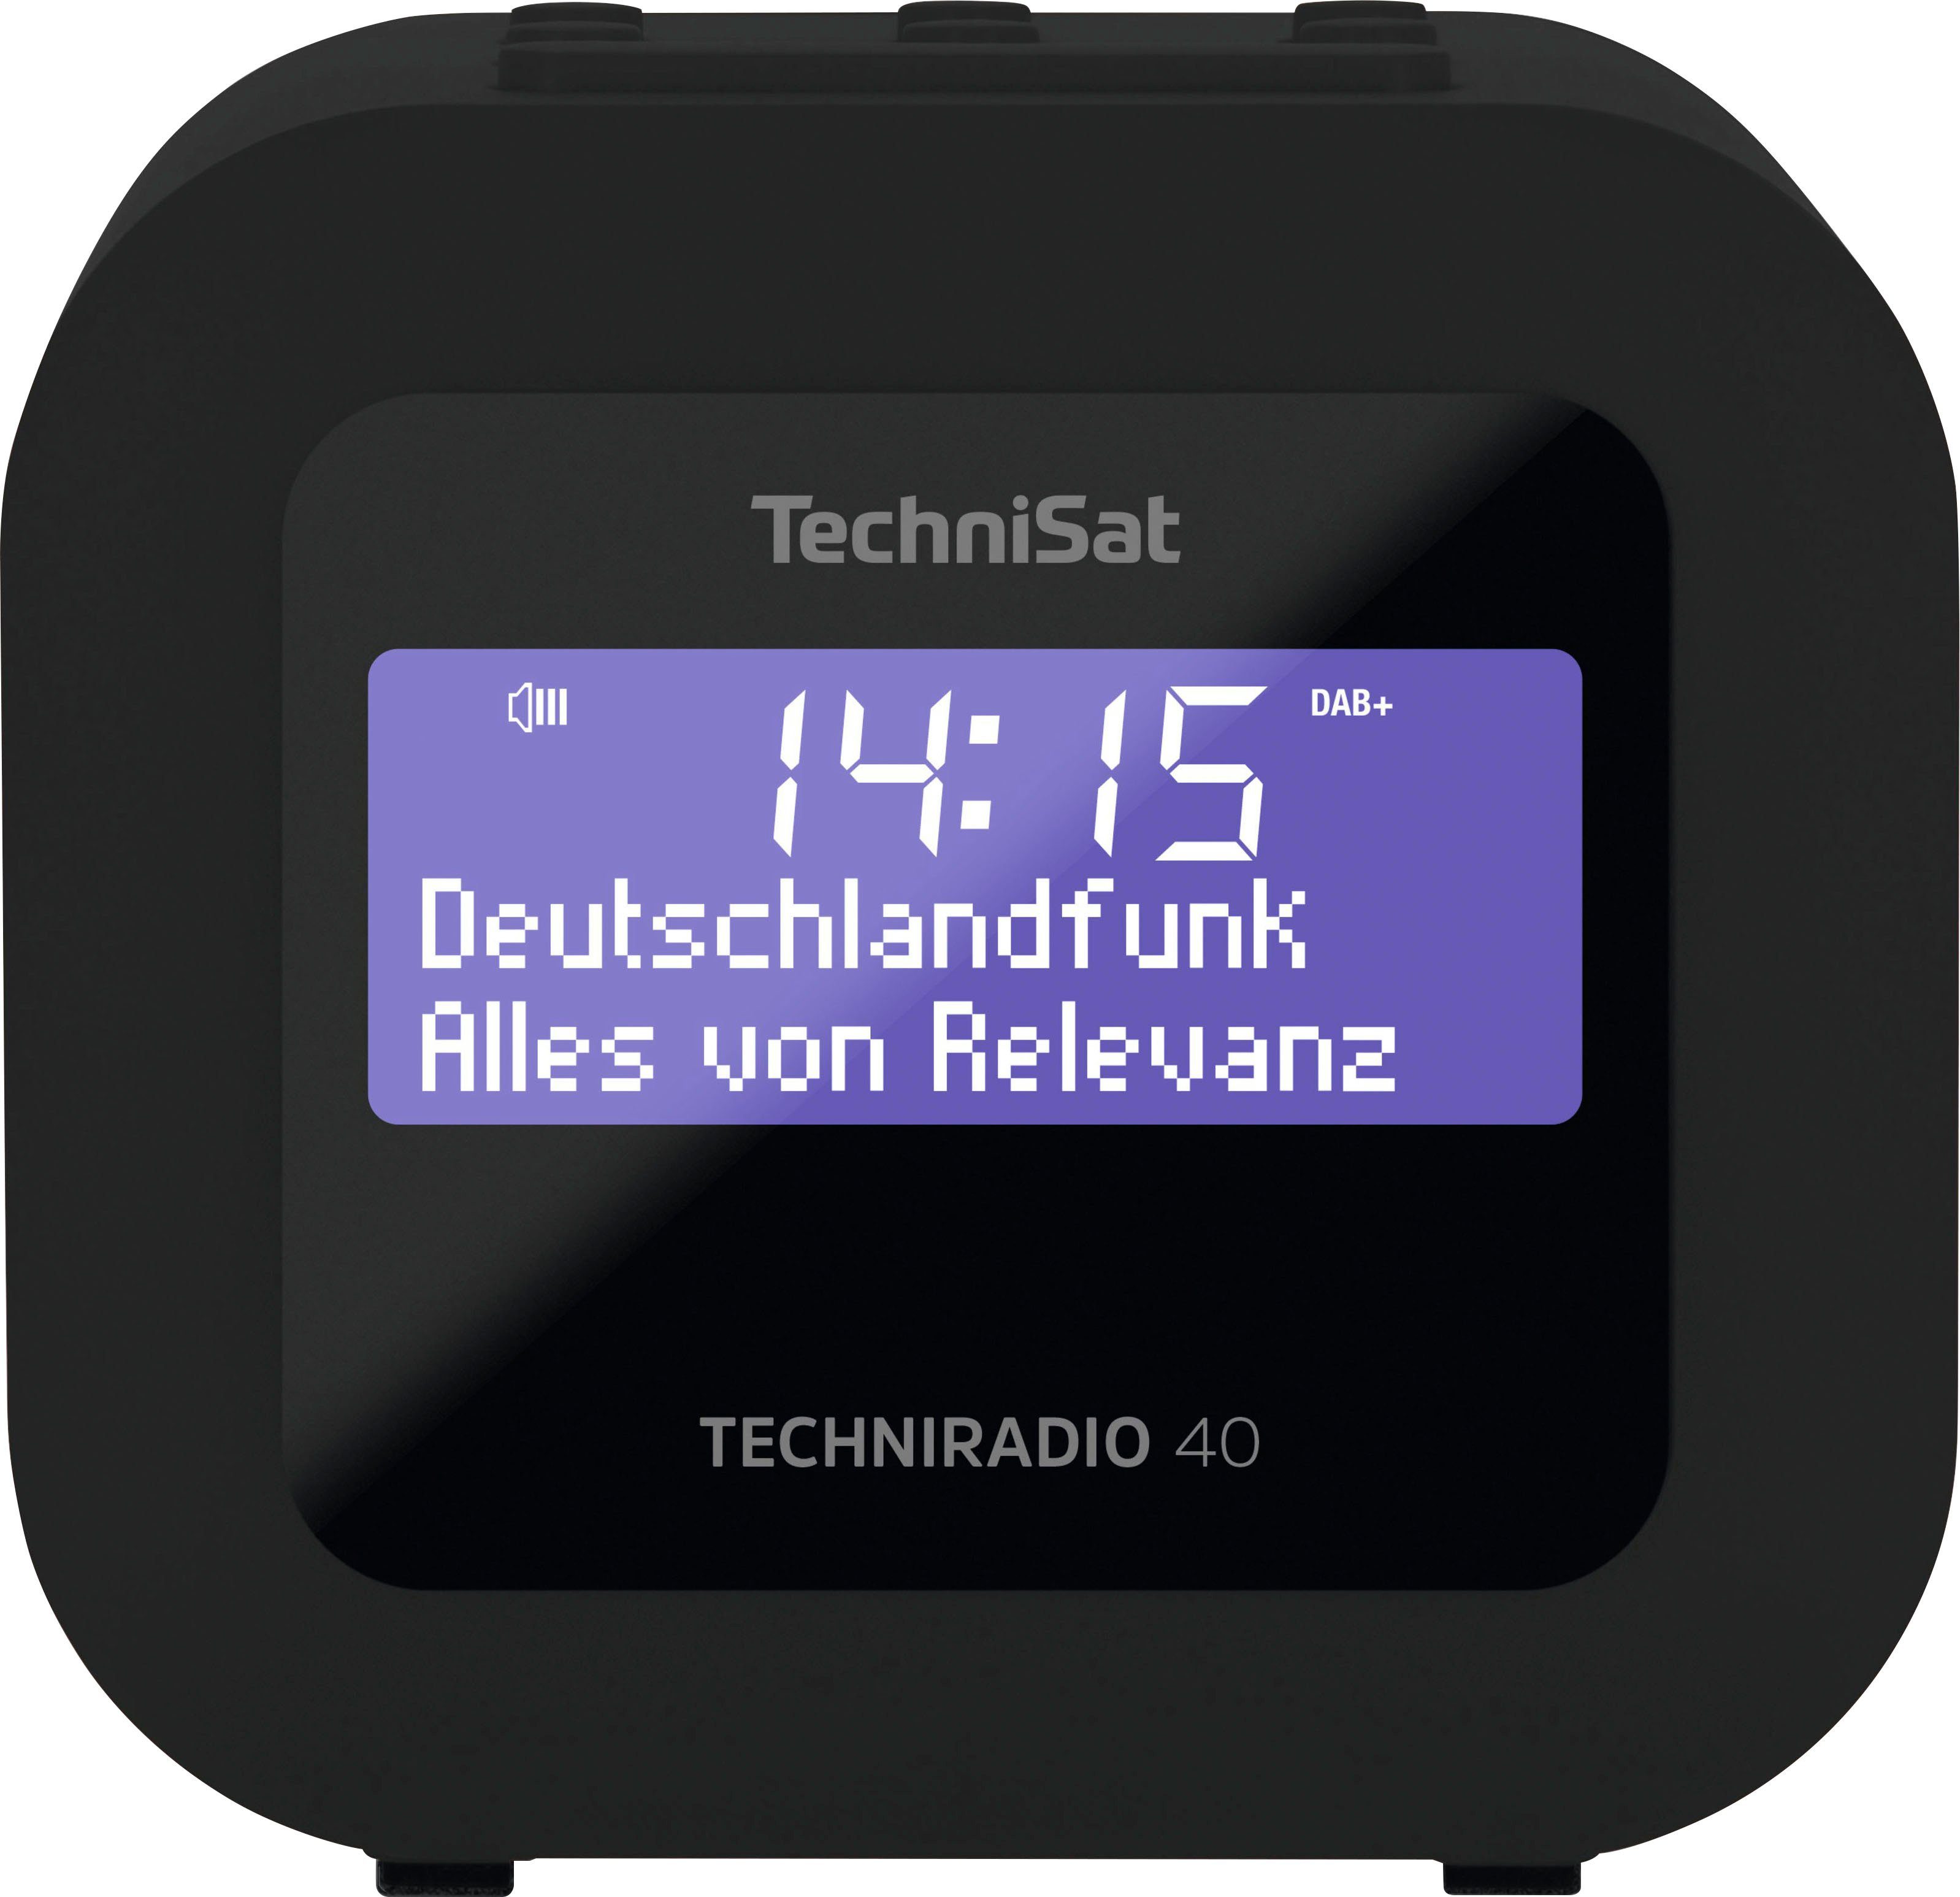 TechniSat TECHNIRADIO 40 Uhrenradio (Digitalradio (DAB), UKW mit RDS, 1,2 W)